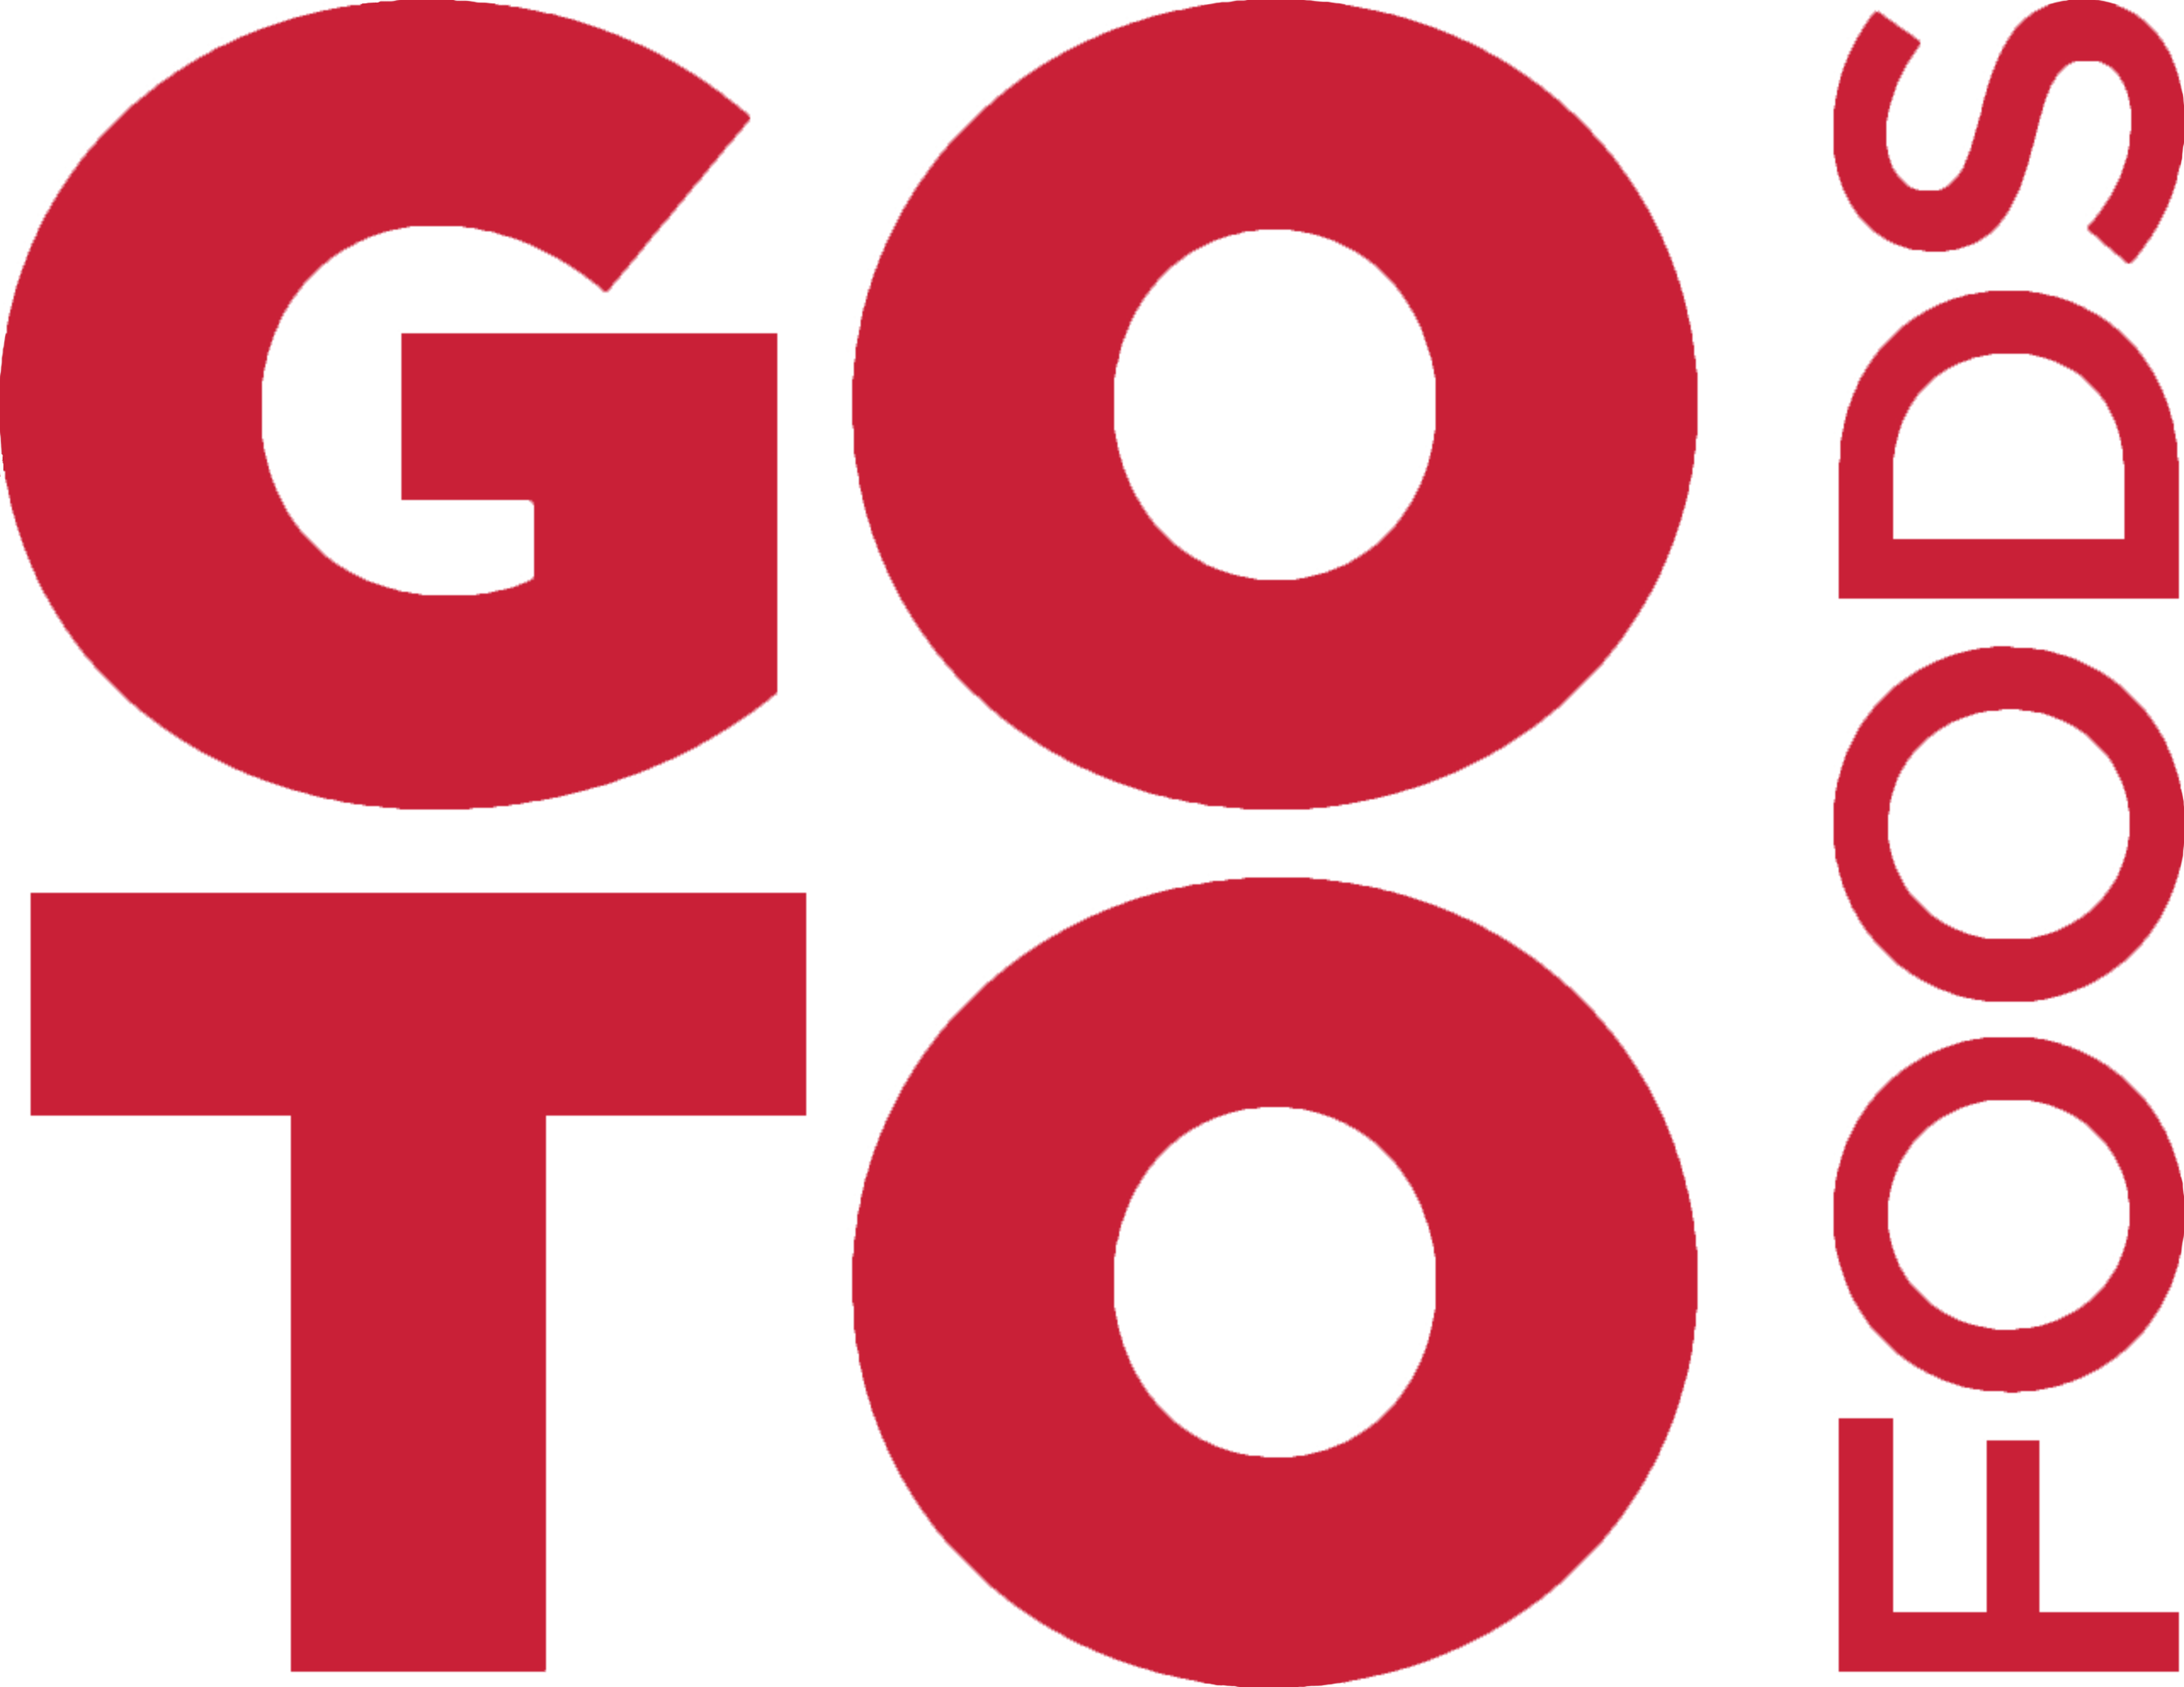 GoTo Foods Logo